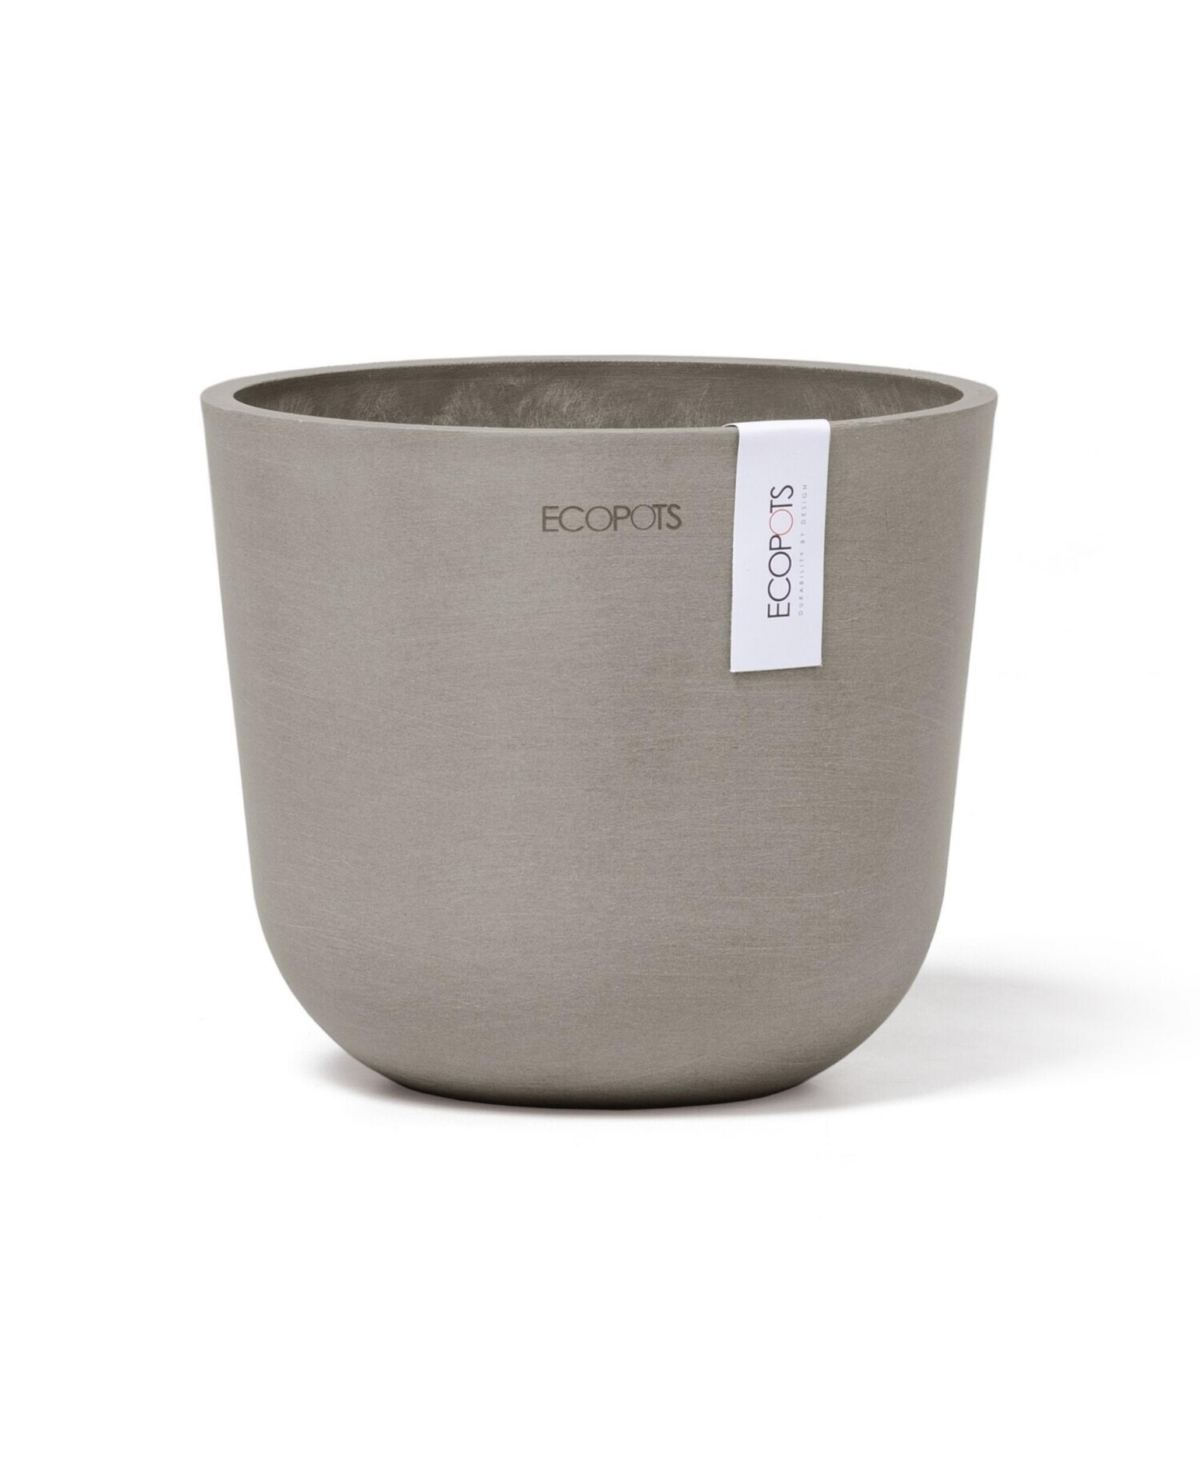 Eco pots Oslo Durable Indoor and Outdoor Planter, 6in - Terracotta